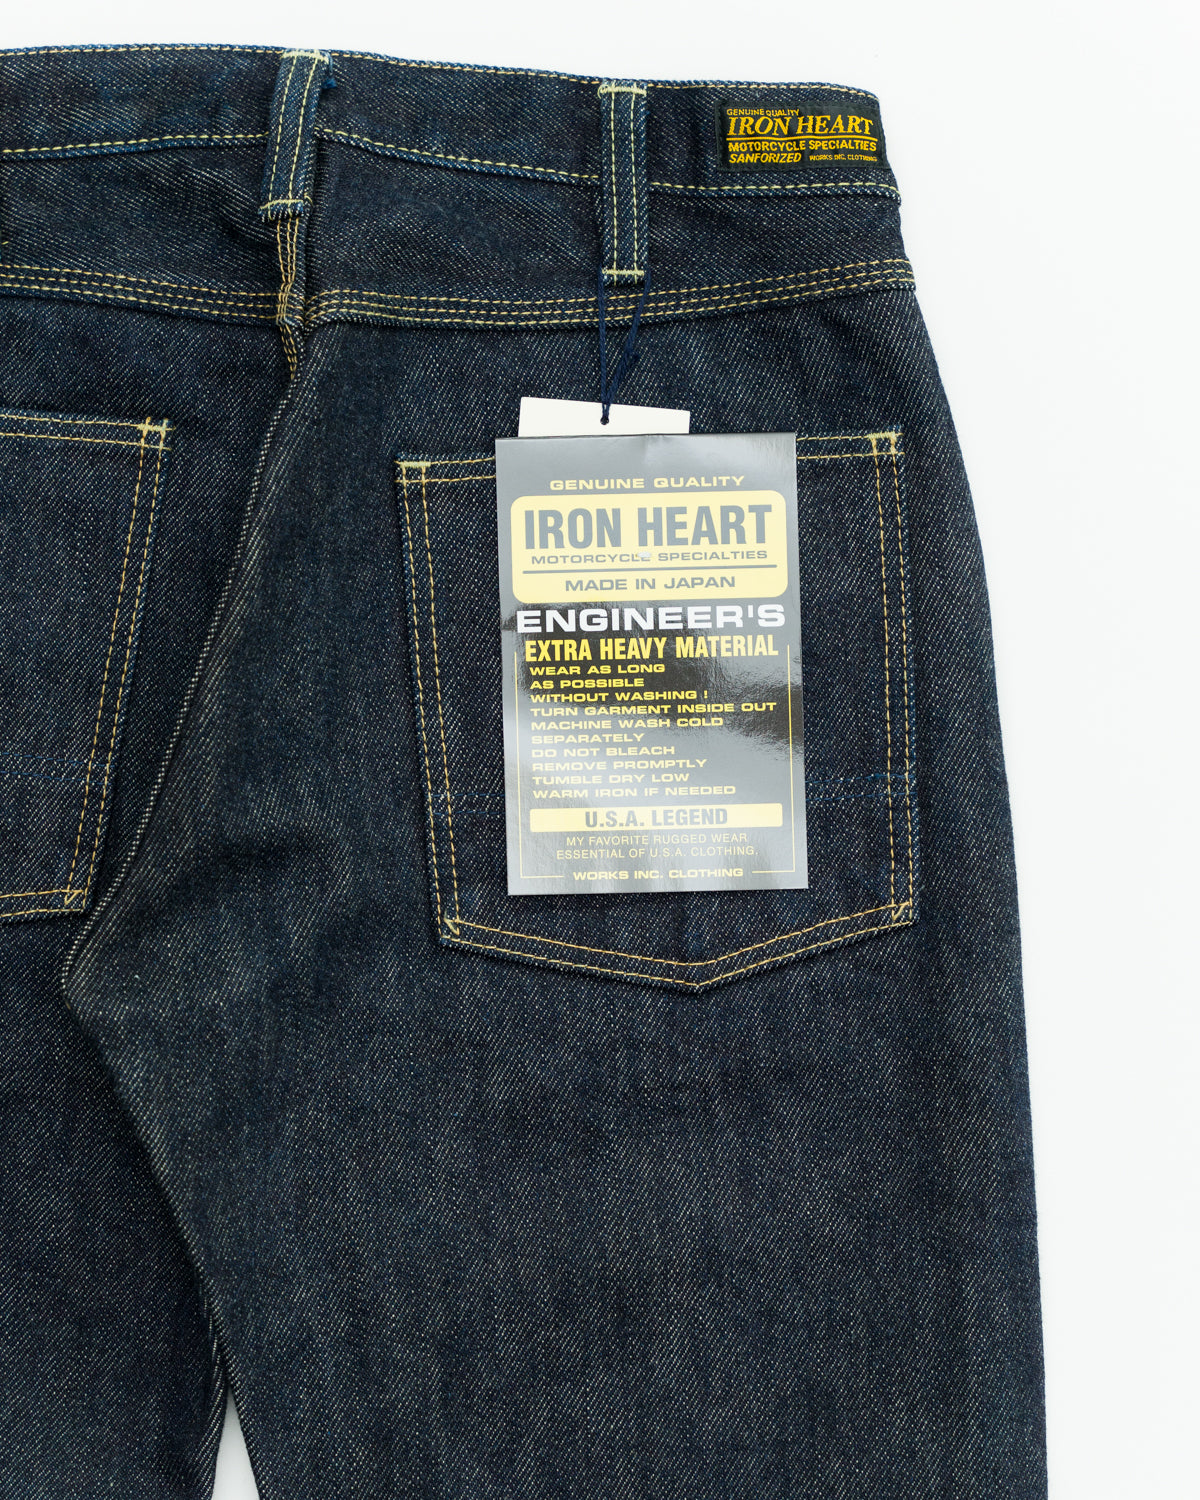 Denim Jeans IRON HEART Herringbone Double Knee Black Work Pants W41  Inseam28